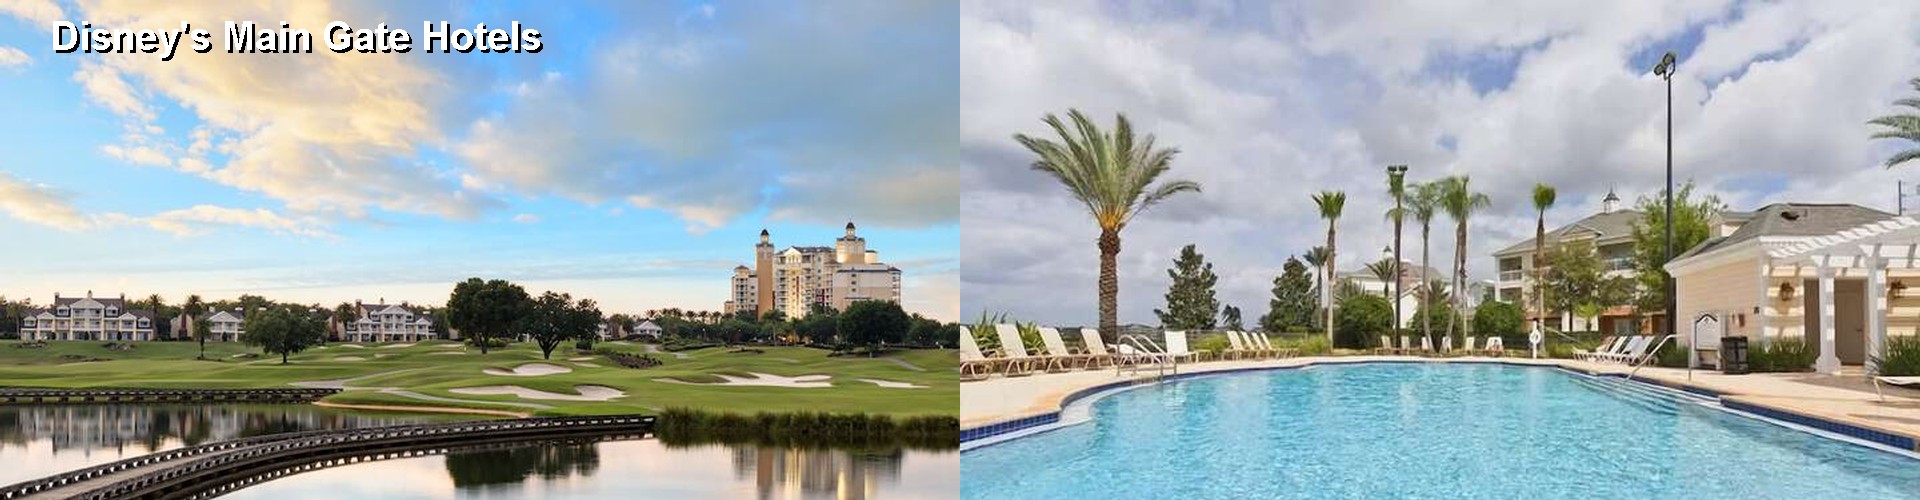 3 Best Hotels near Disney's Main Gate